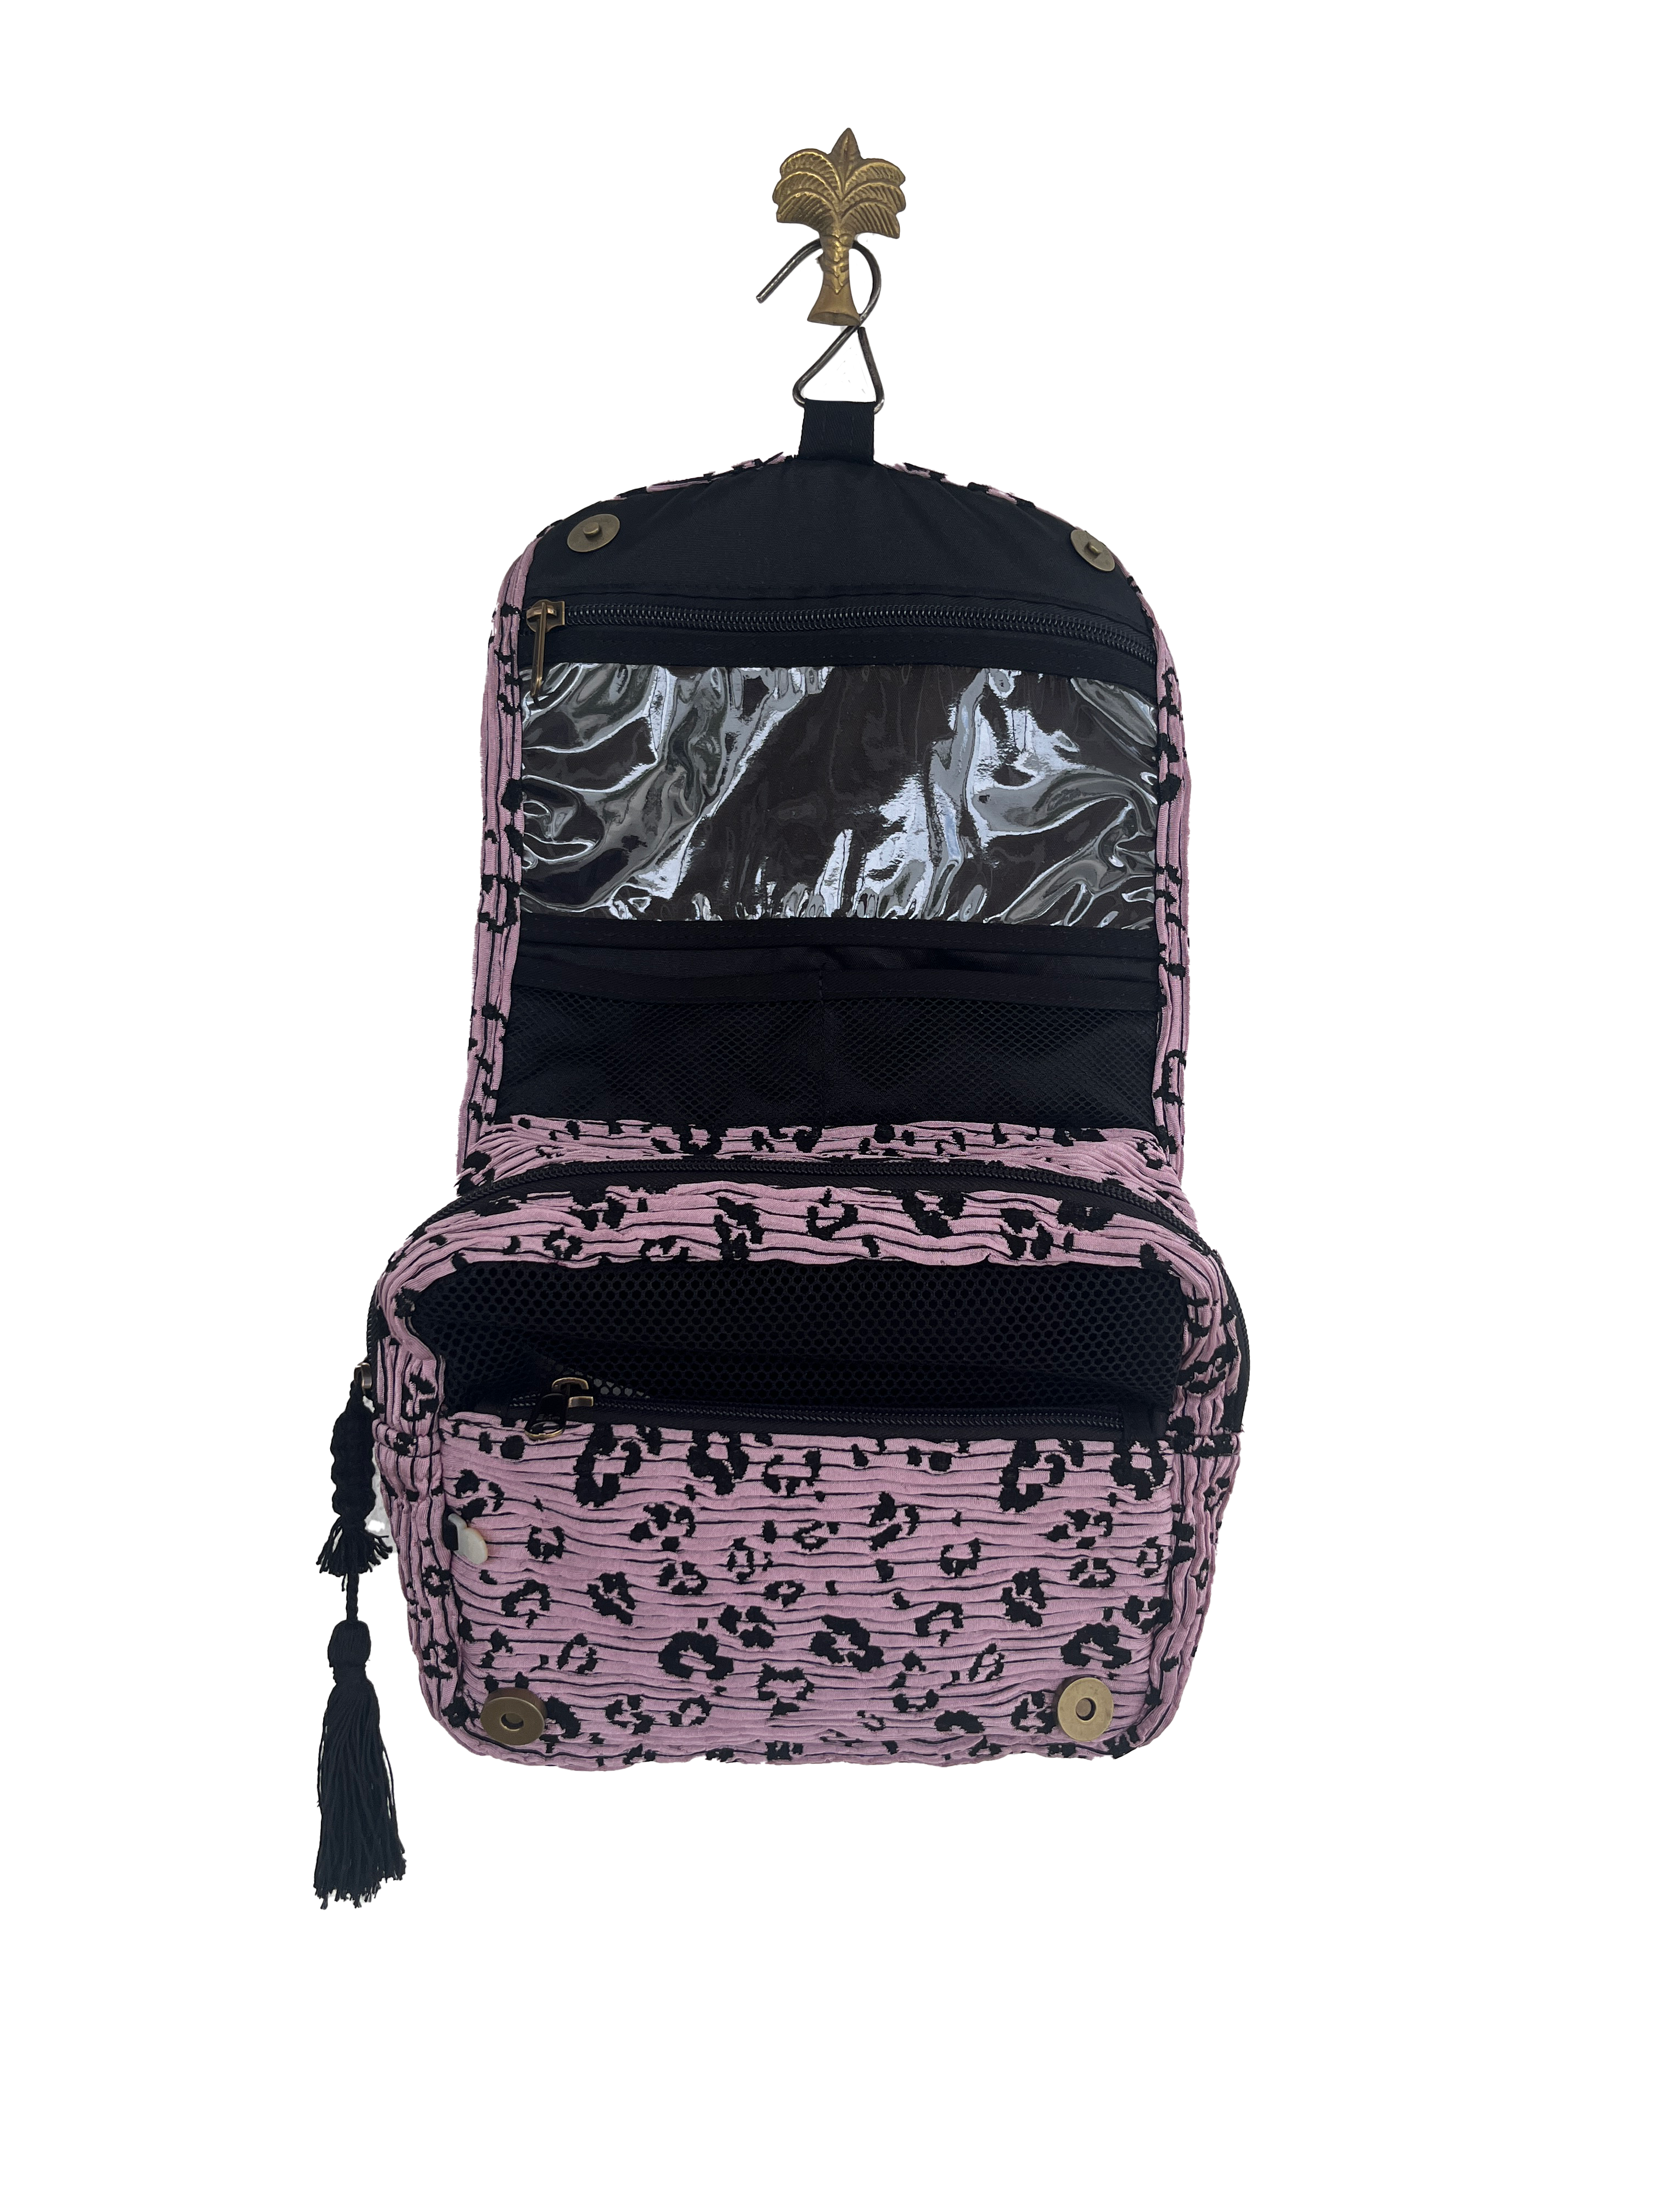 Violet Savage Travel Bag